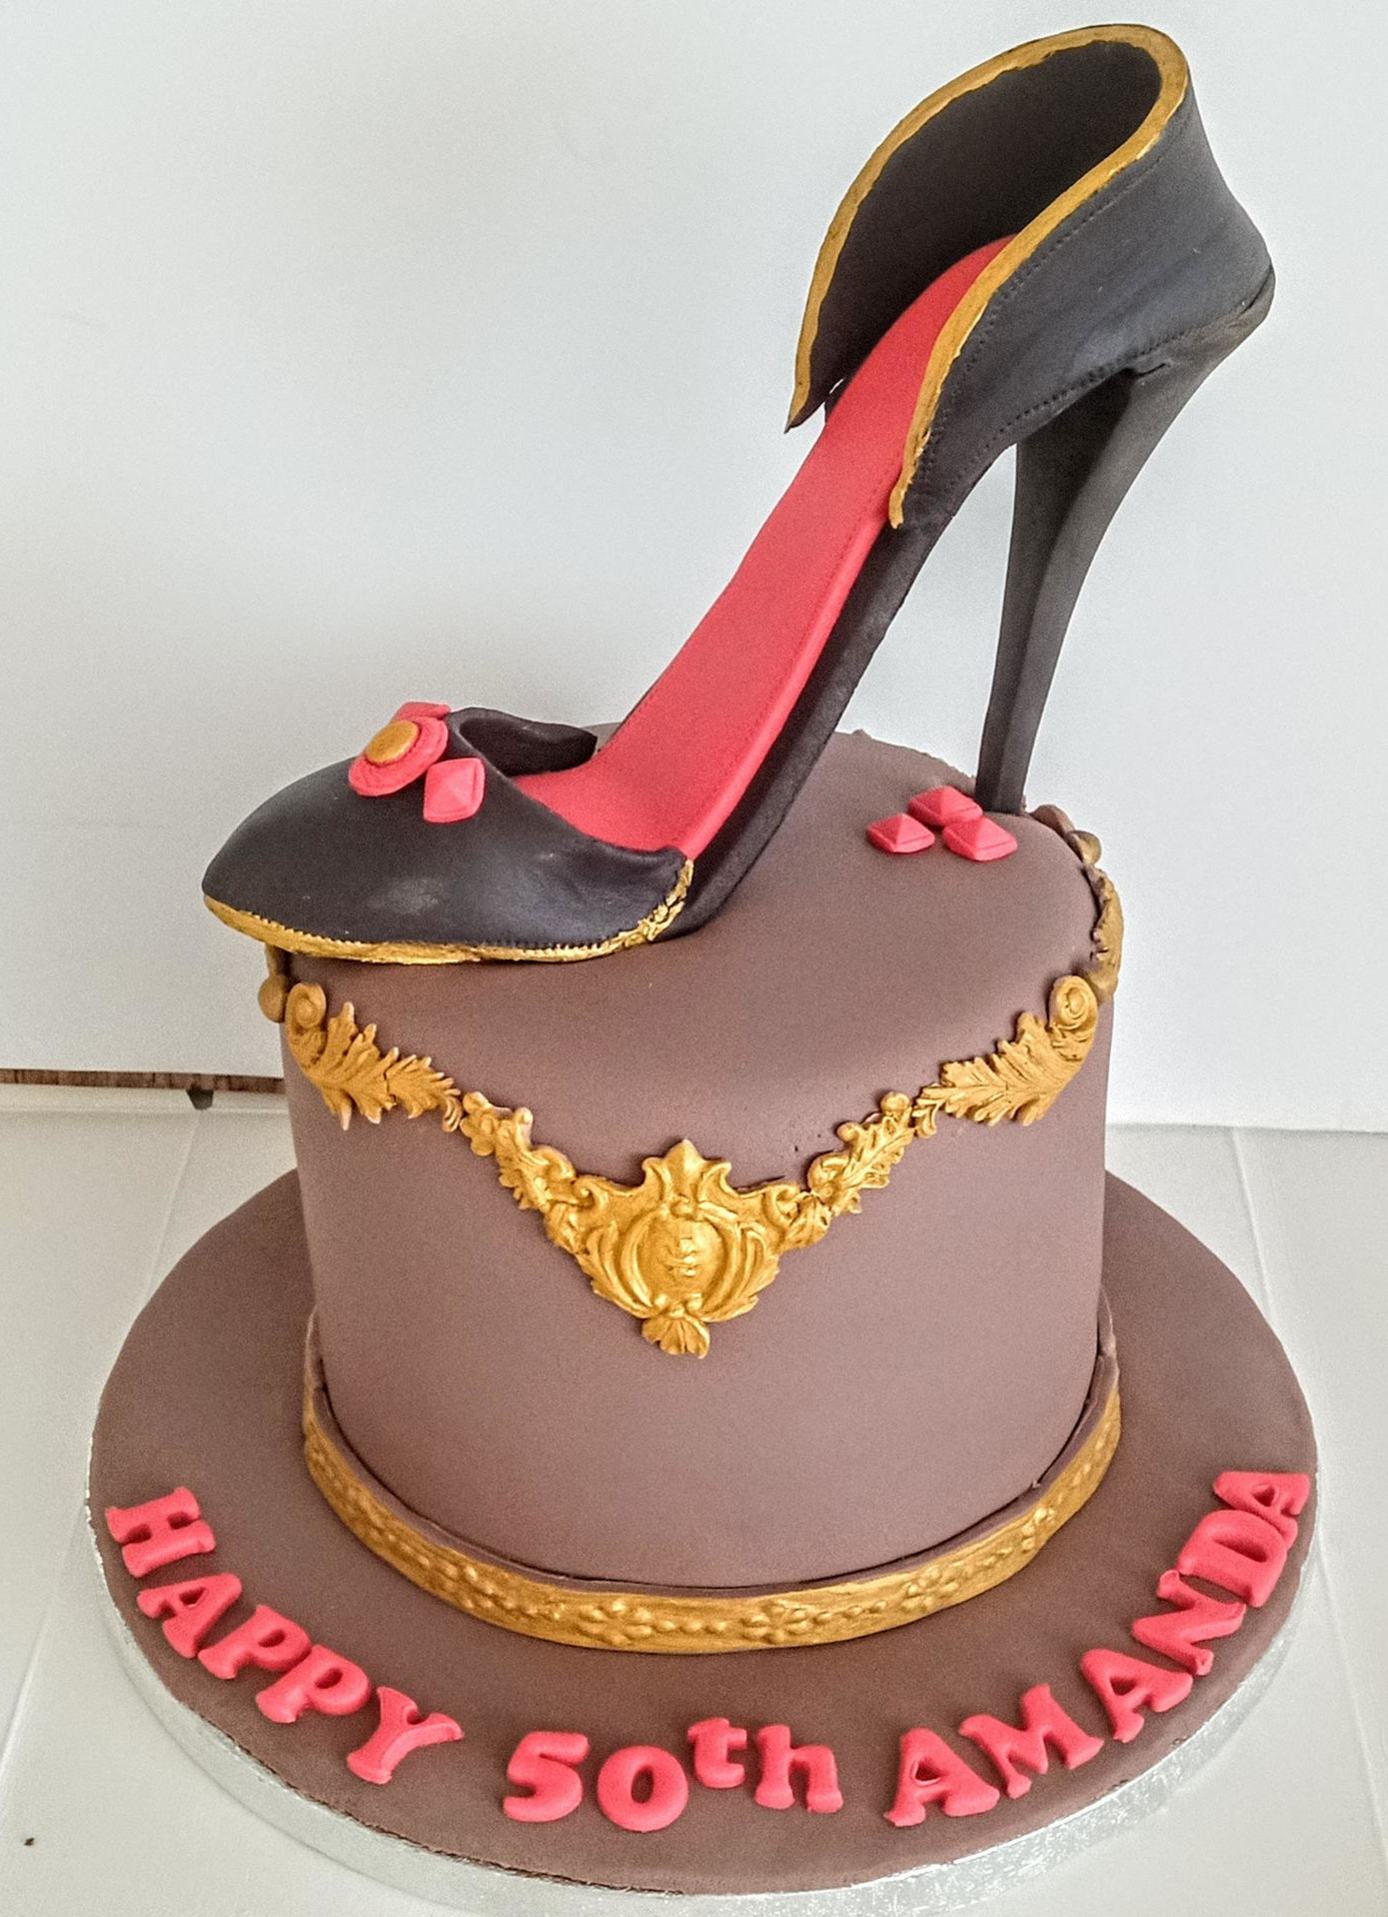 A Stiletto shoe 50th birthday cake